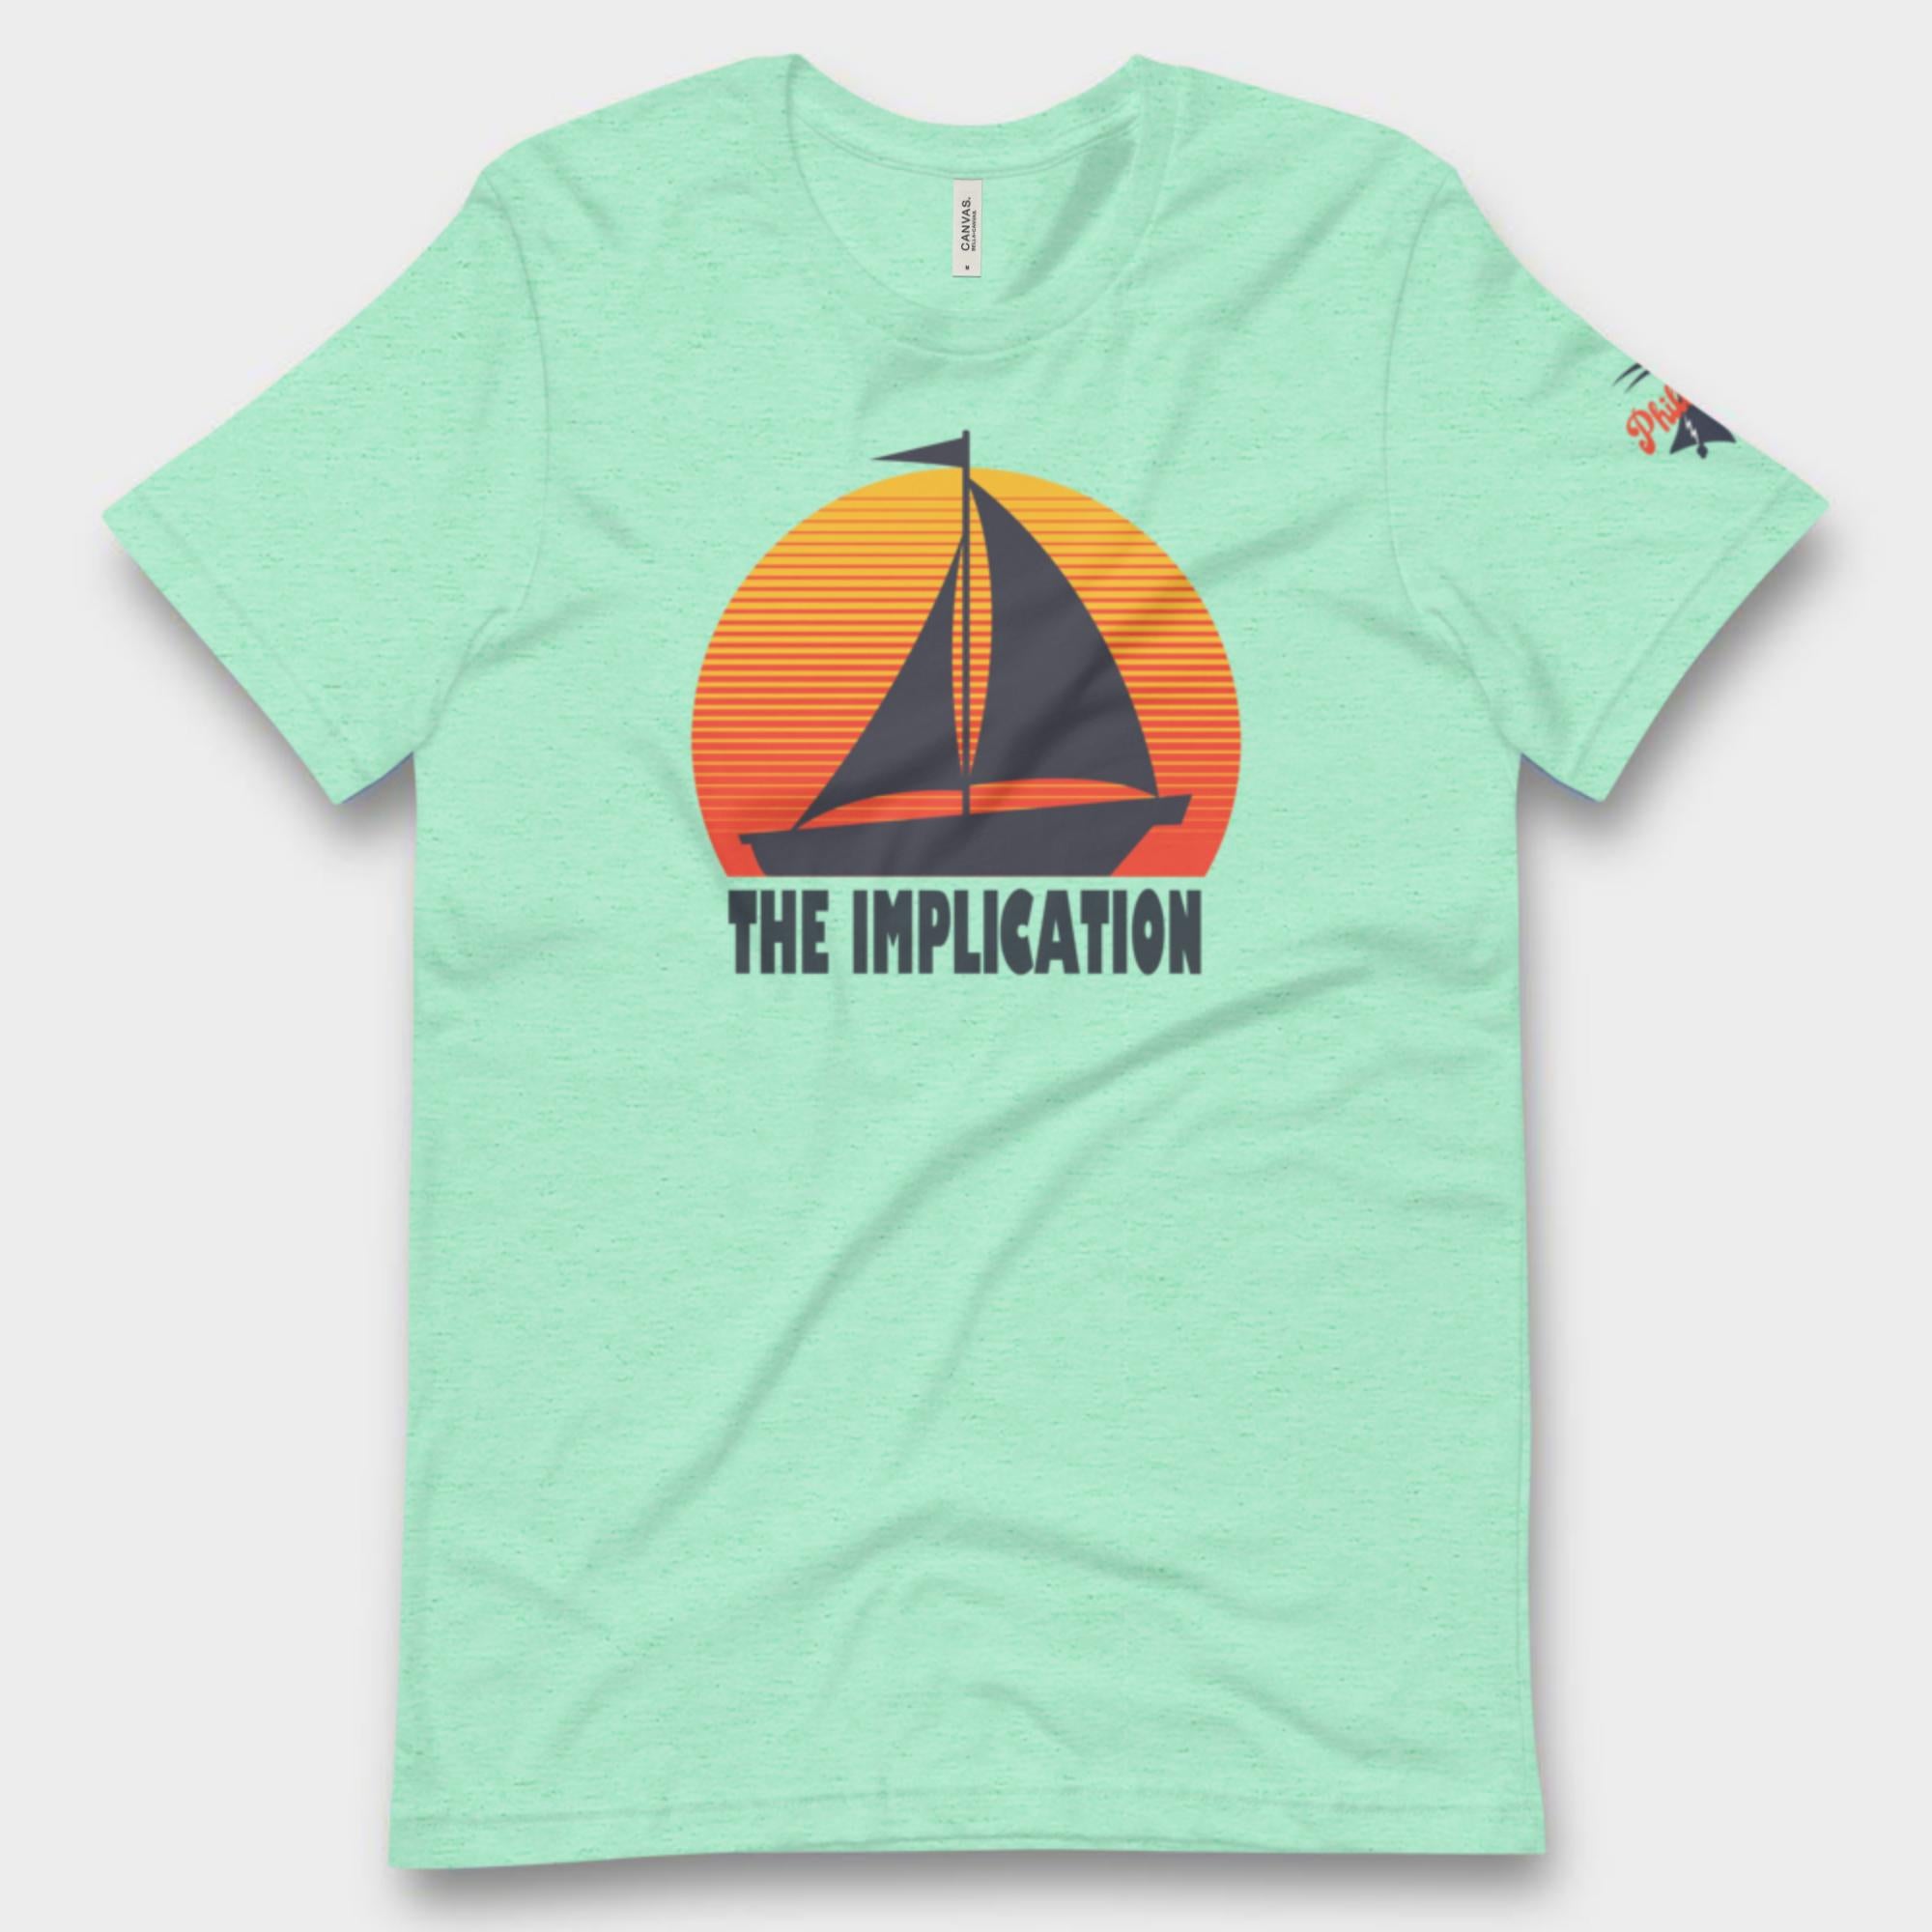 "The Implication" Tee